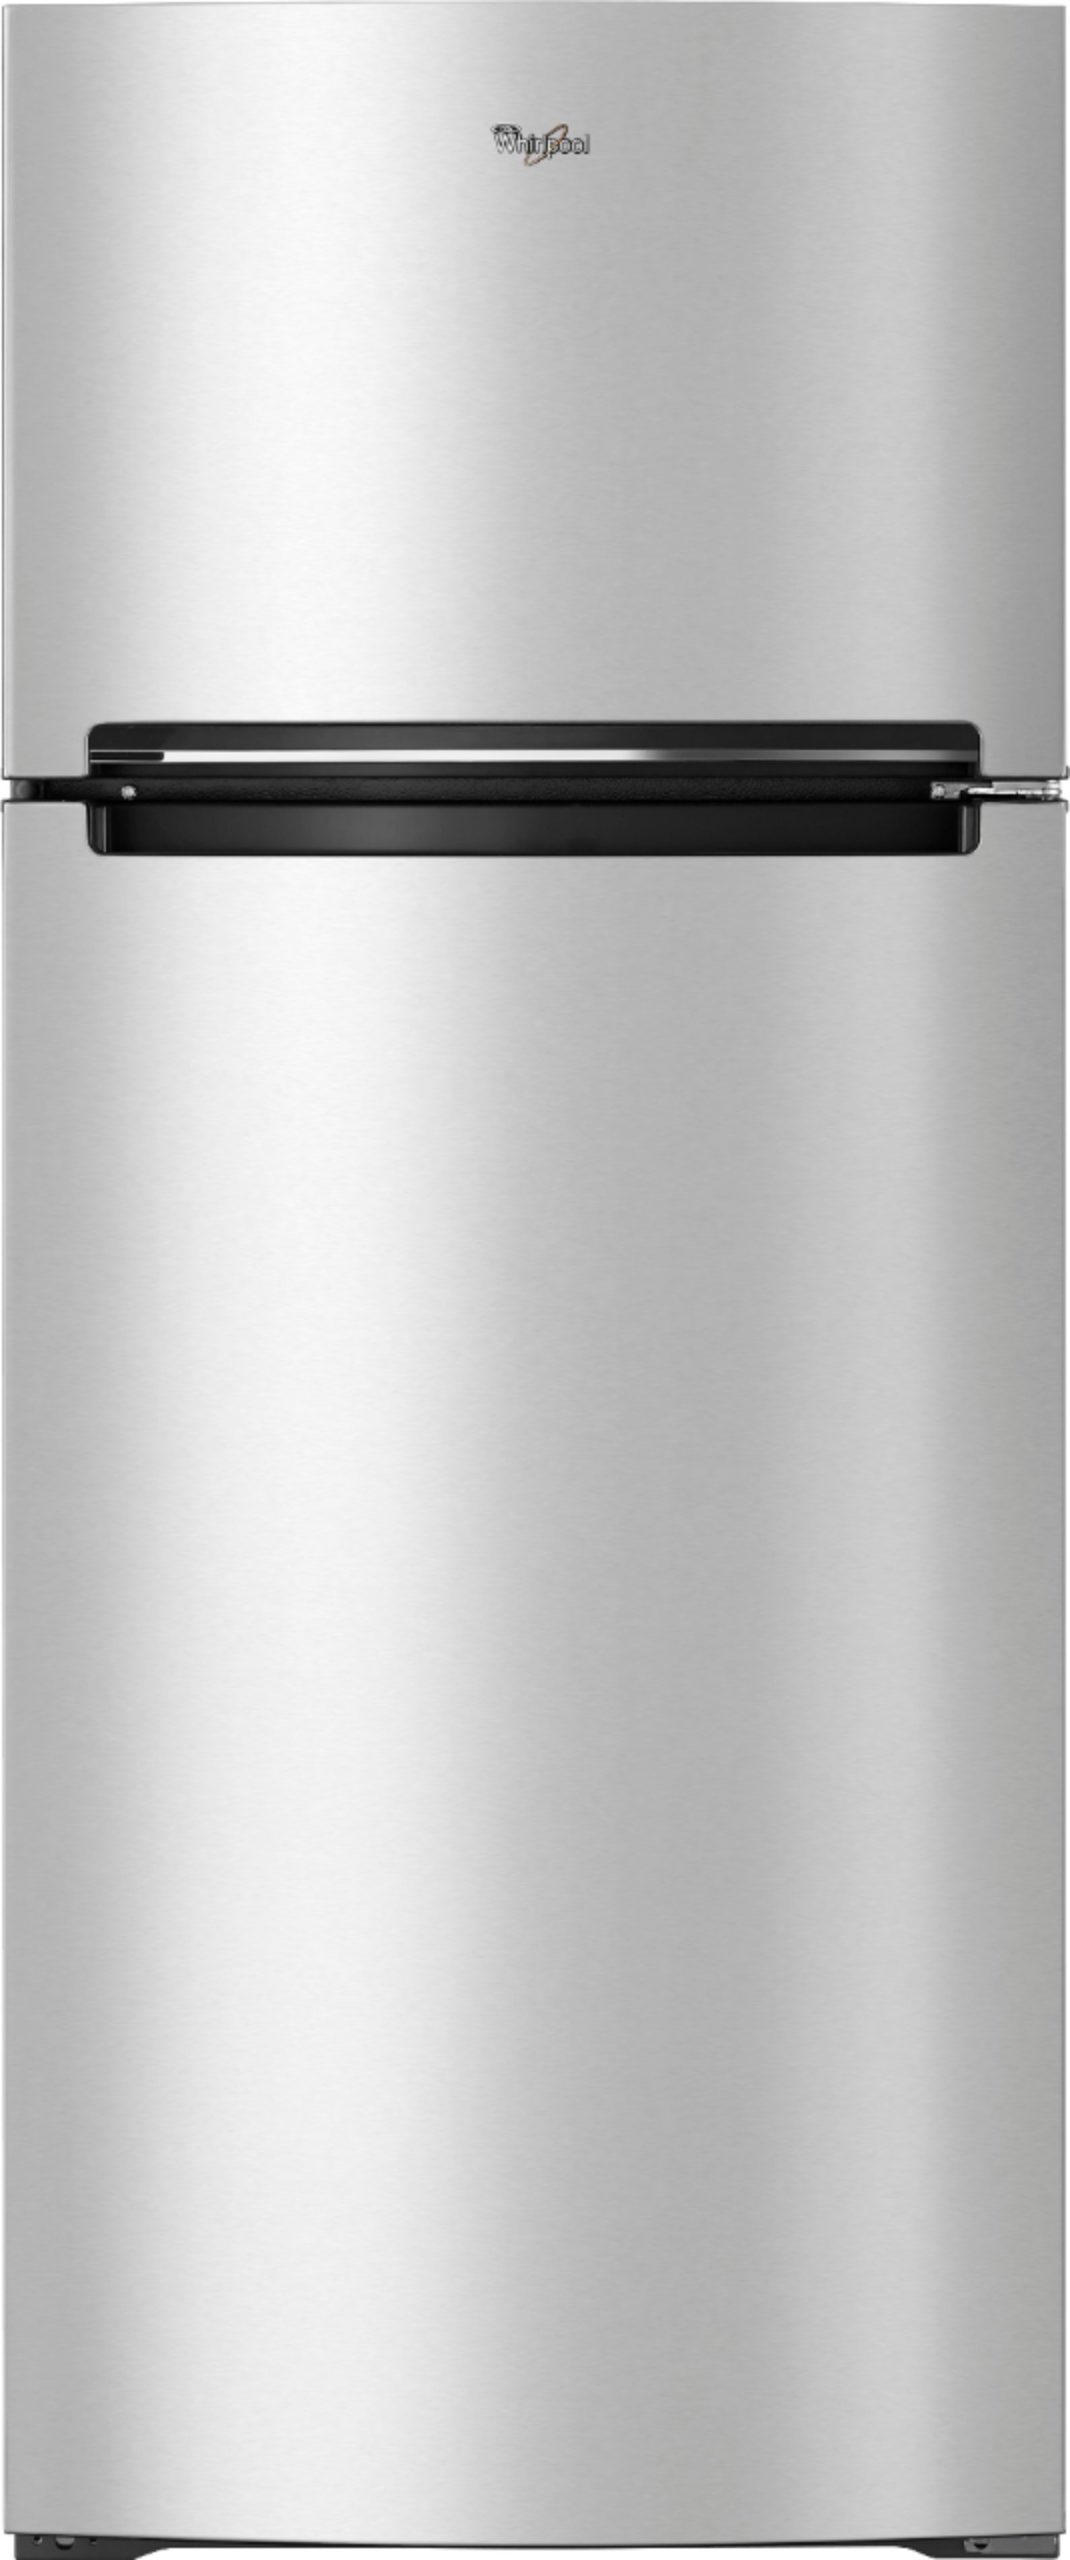 Whirlpool - 17.7 Cu. Ft. Top-Freezer Refrigerator 